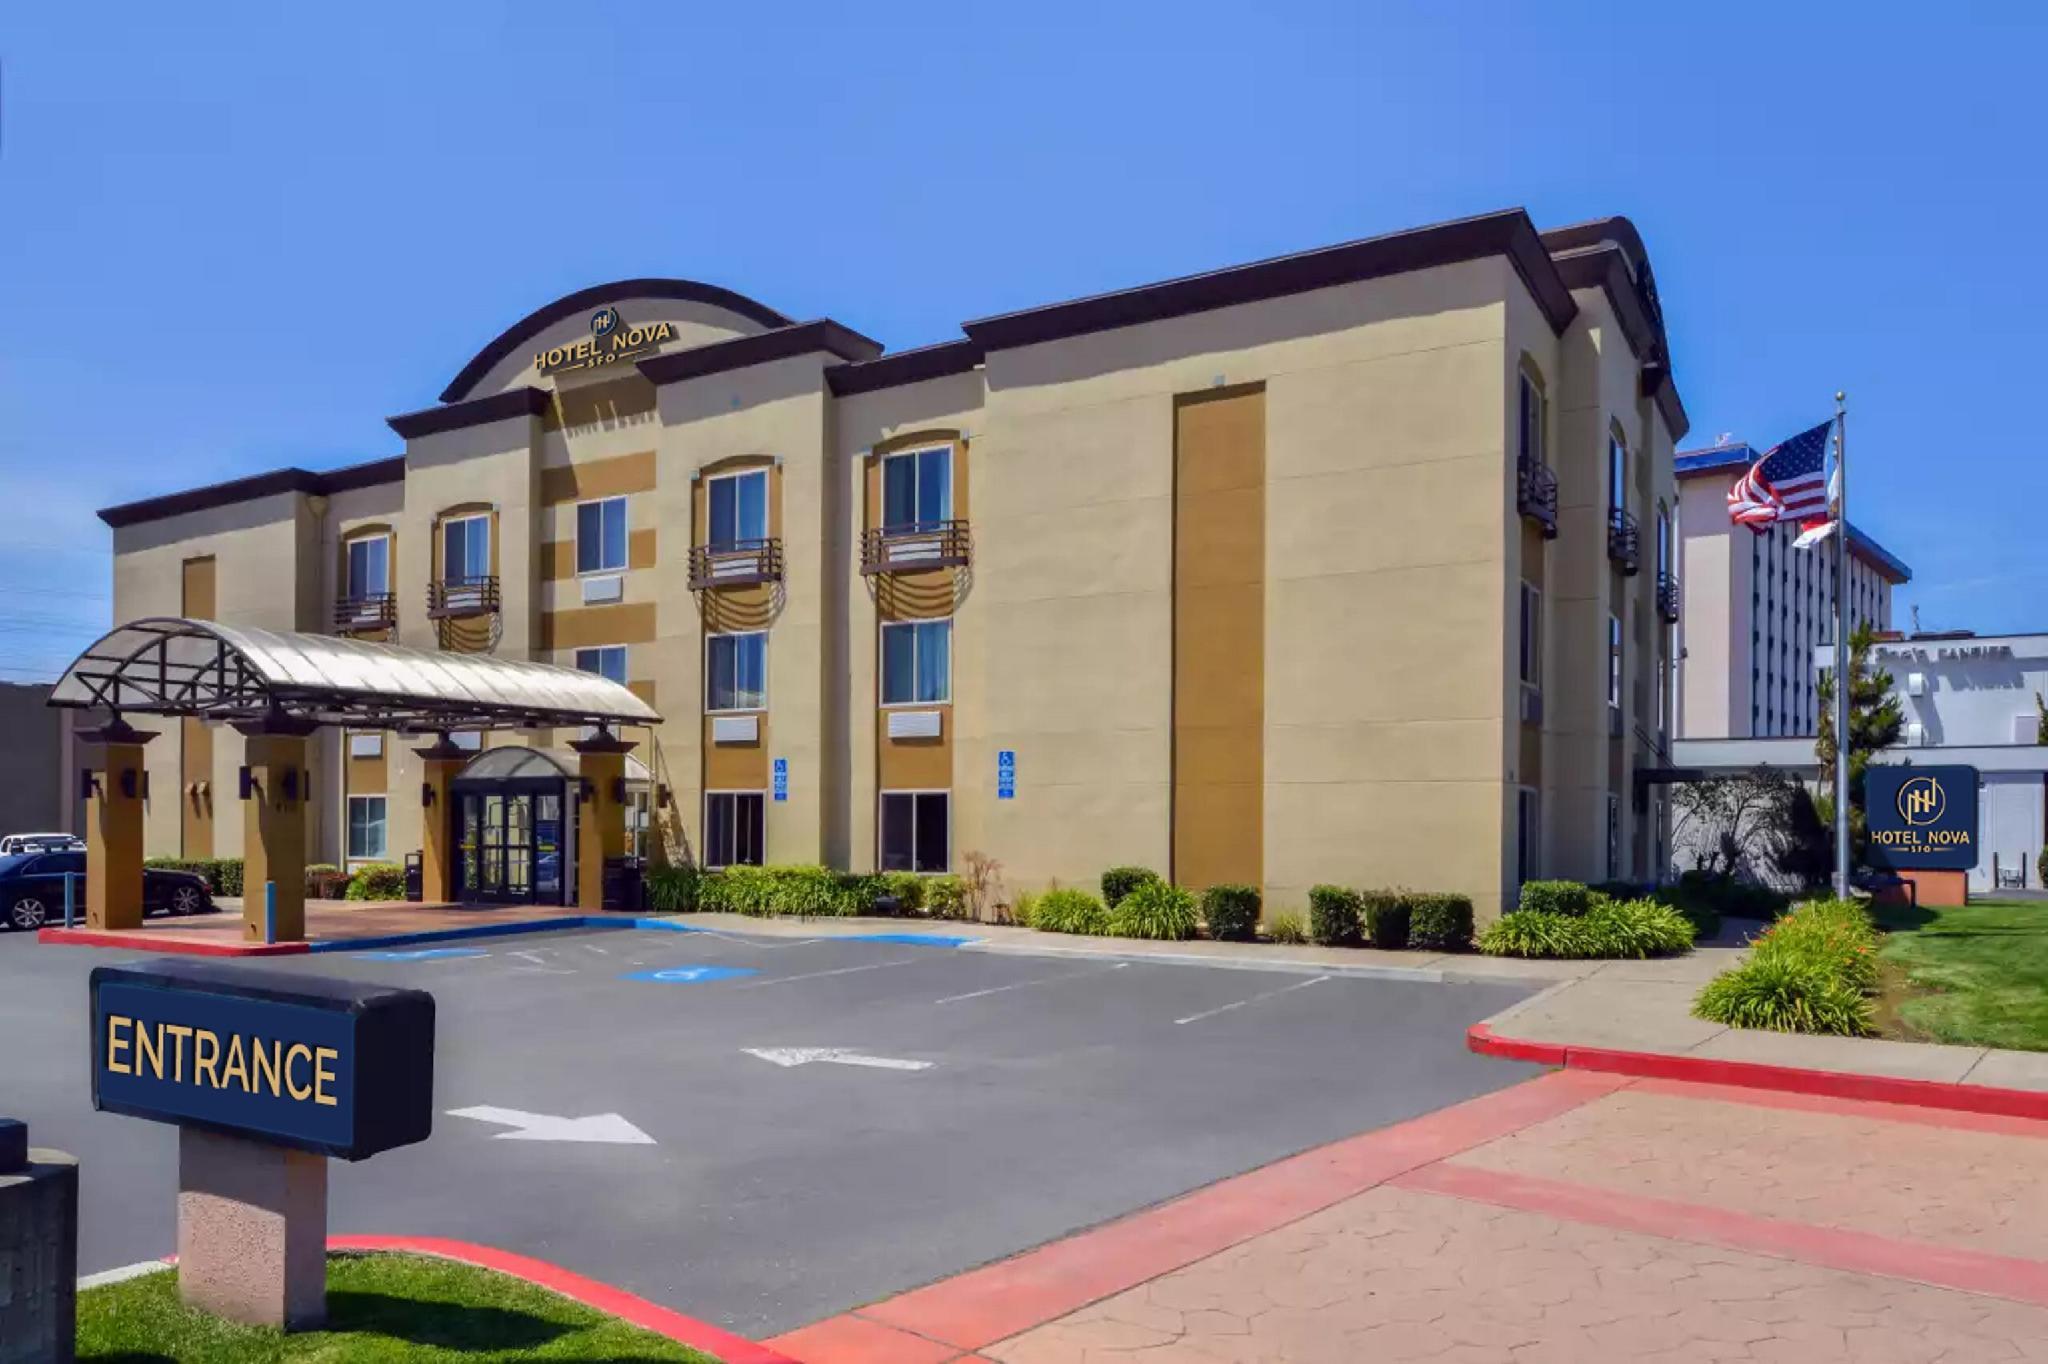 Hotel Nova Sfo - A Fairbridge Hotel - San Bruno, CA